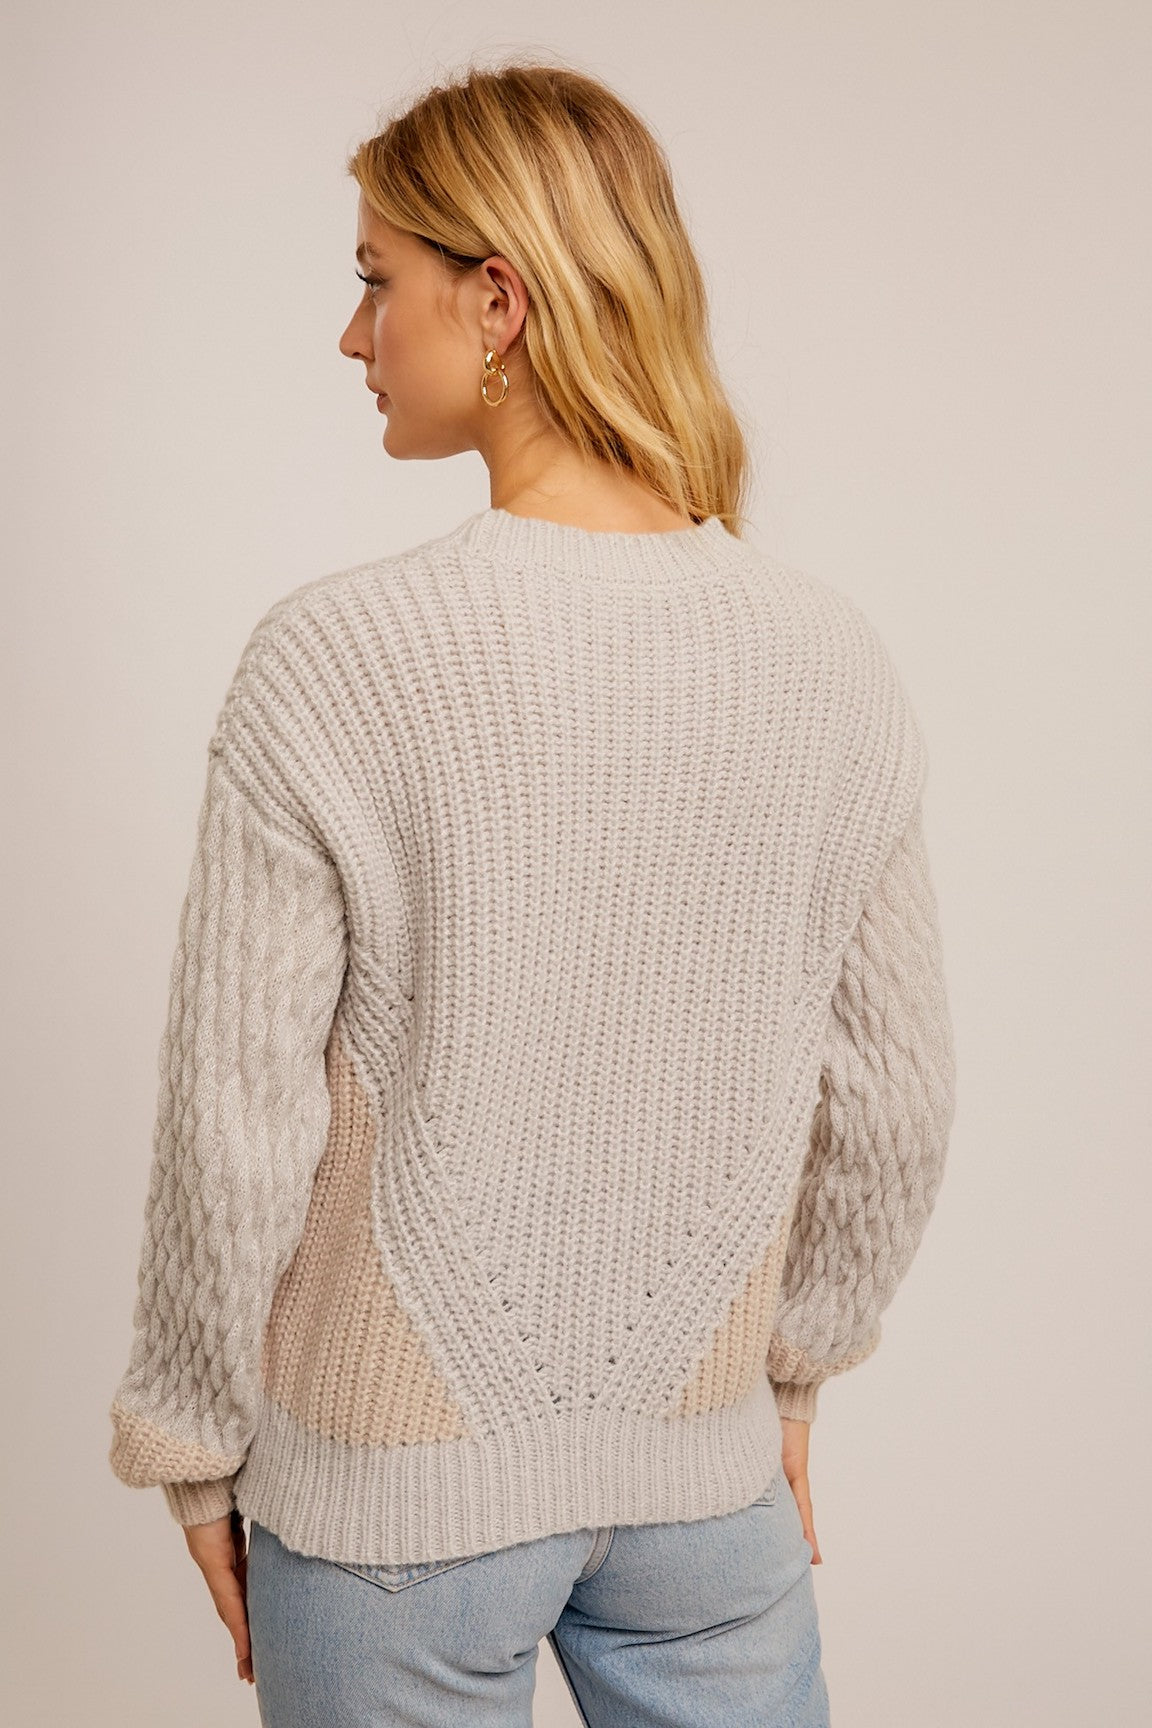 Radleigh Grey Mixed Texture Sweater